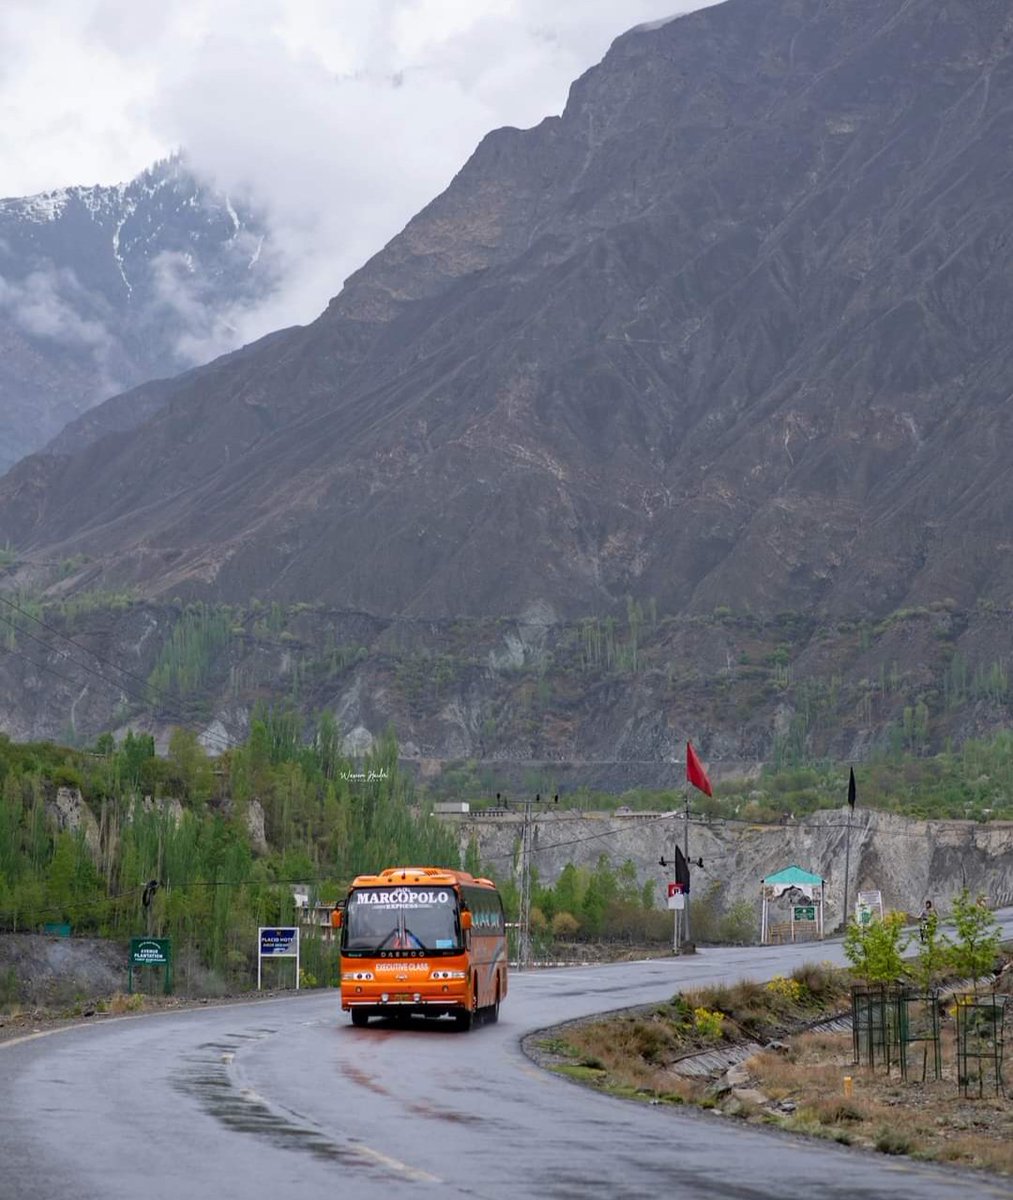 A bus is on its way to its destination in the beautiful weather of Gilgit-Baltistan. The roads of Gilgit-Baltistan give the impression of a paradise. #GilgitBaltistan #Pakistan #Natute #GB #สุขุมวิท #RainyDays #beabaldi #สีลม #ถนนข้าวสาร #RoadTrip #sergetti #North